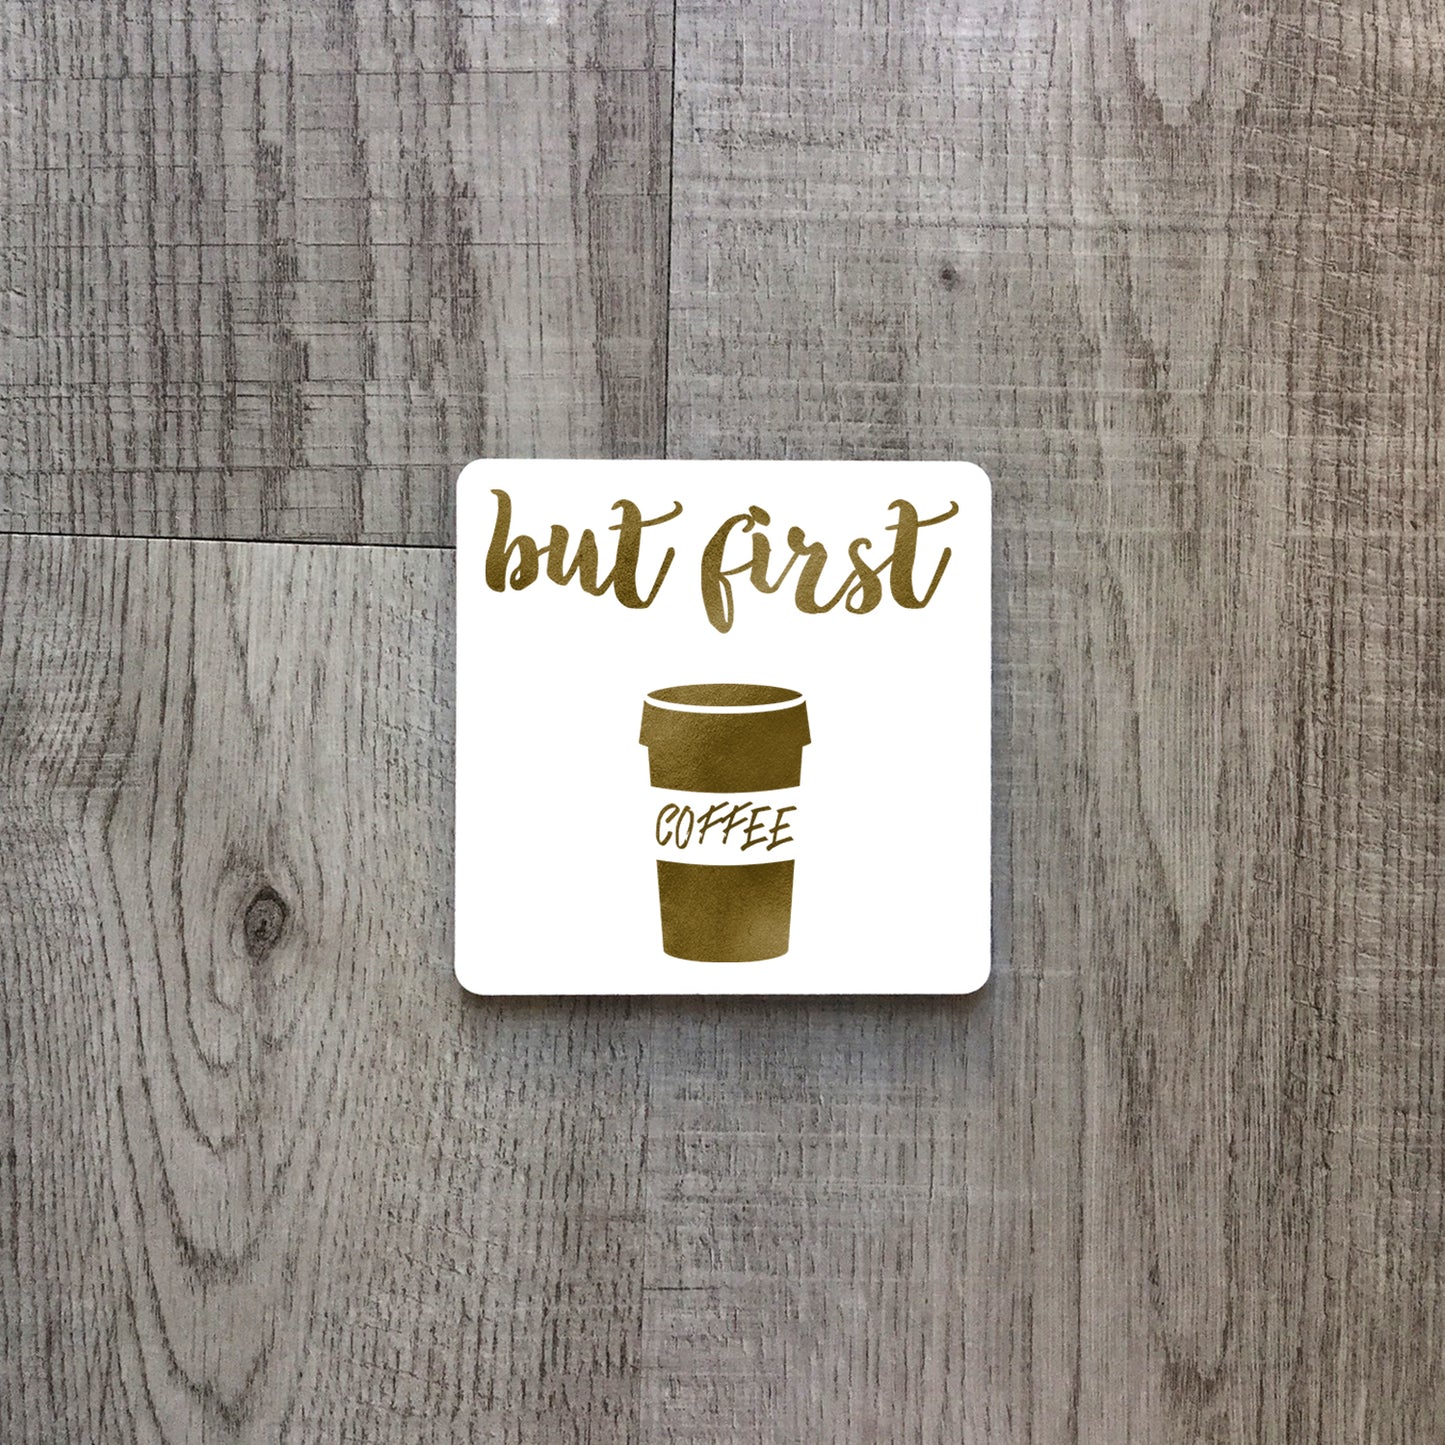 But first coffee | Ceramic mug